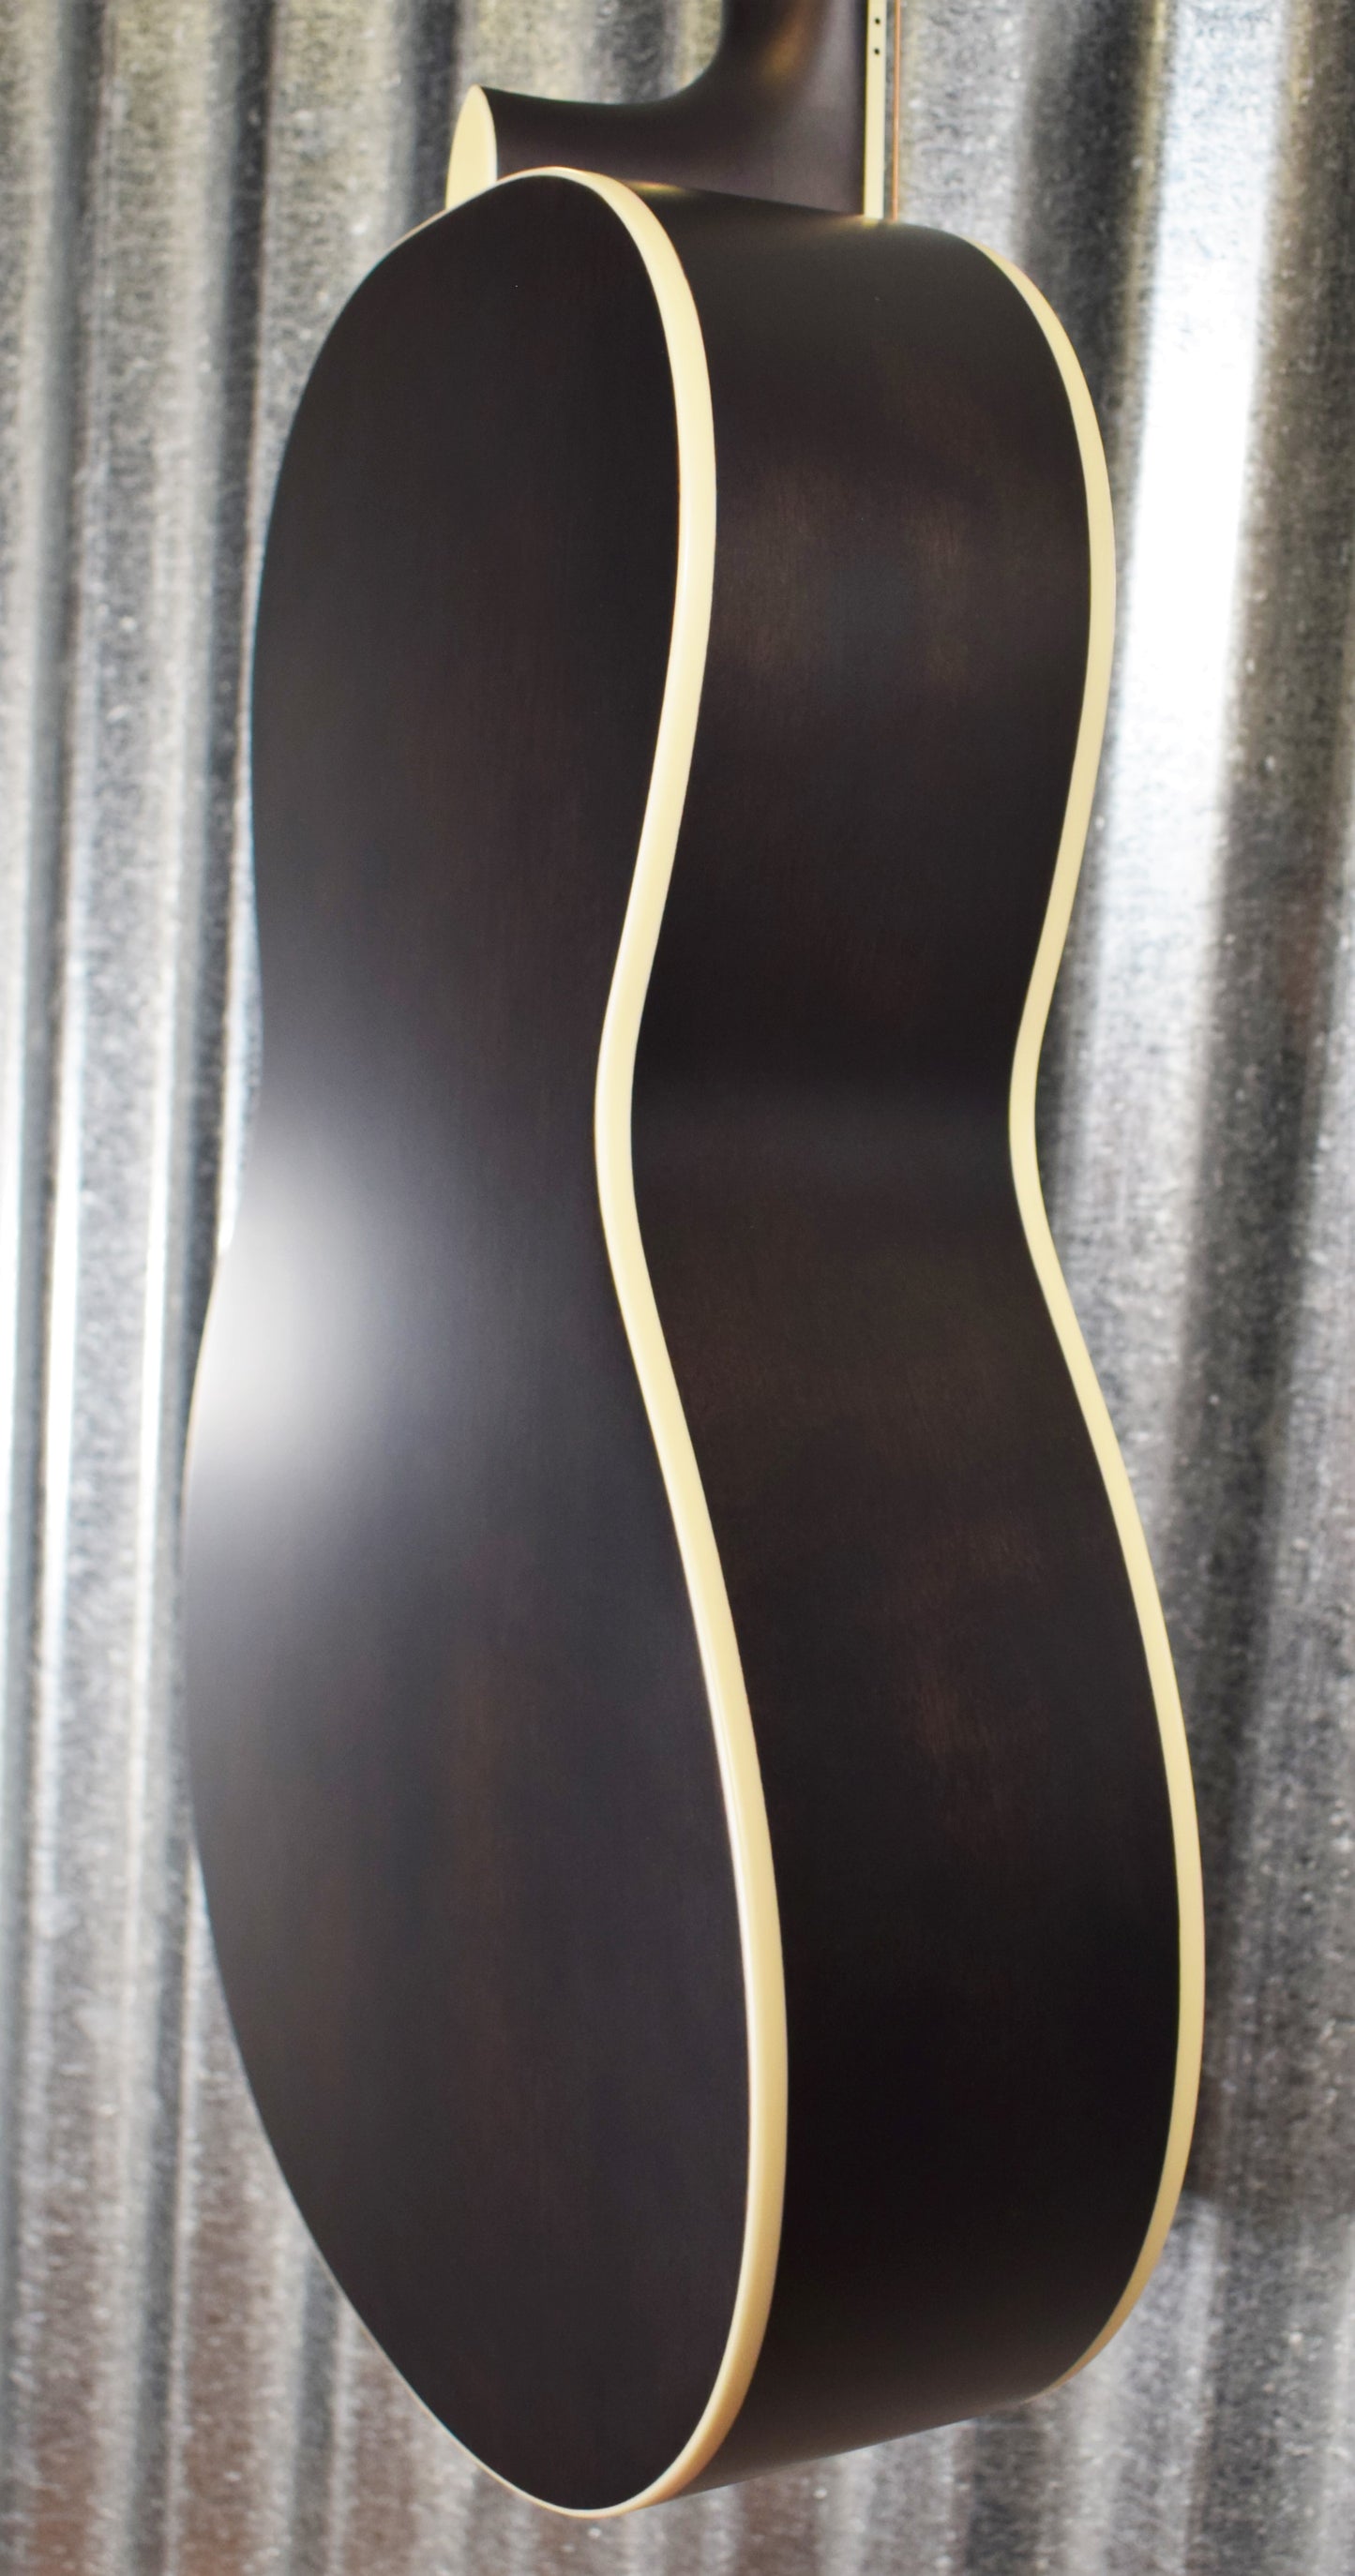 PRS Paul Reed Smith SE Tonare Parlor Charcoal Acoustic Electric Guitar & Bag PE20PSACH #2395